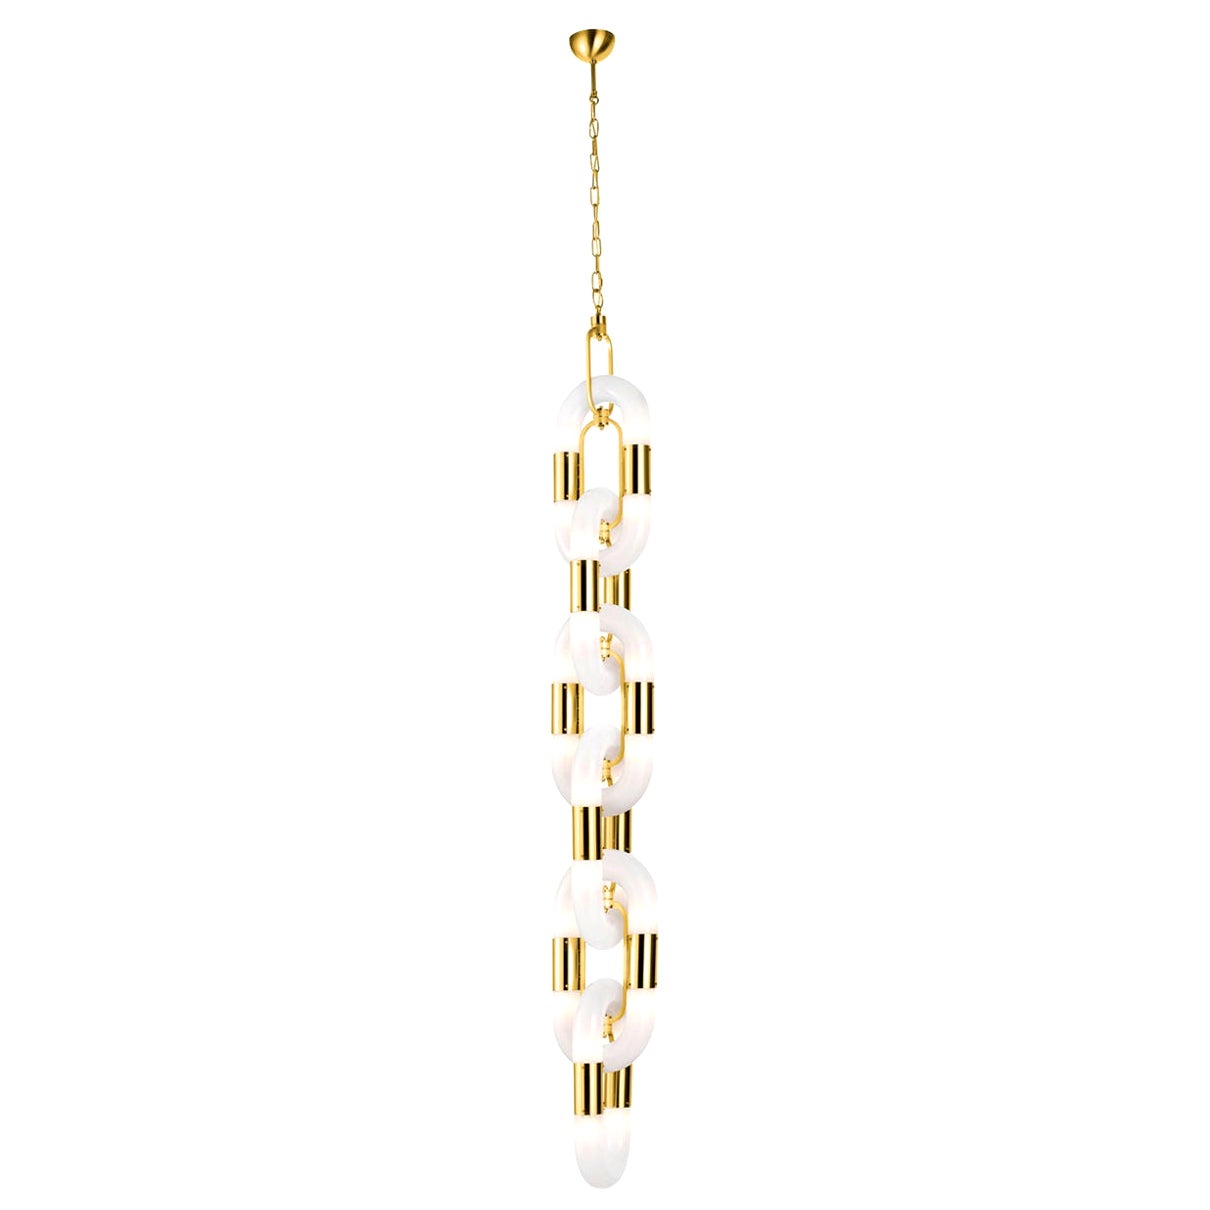 Chain Gold 6 Links Pendant Lamp